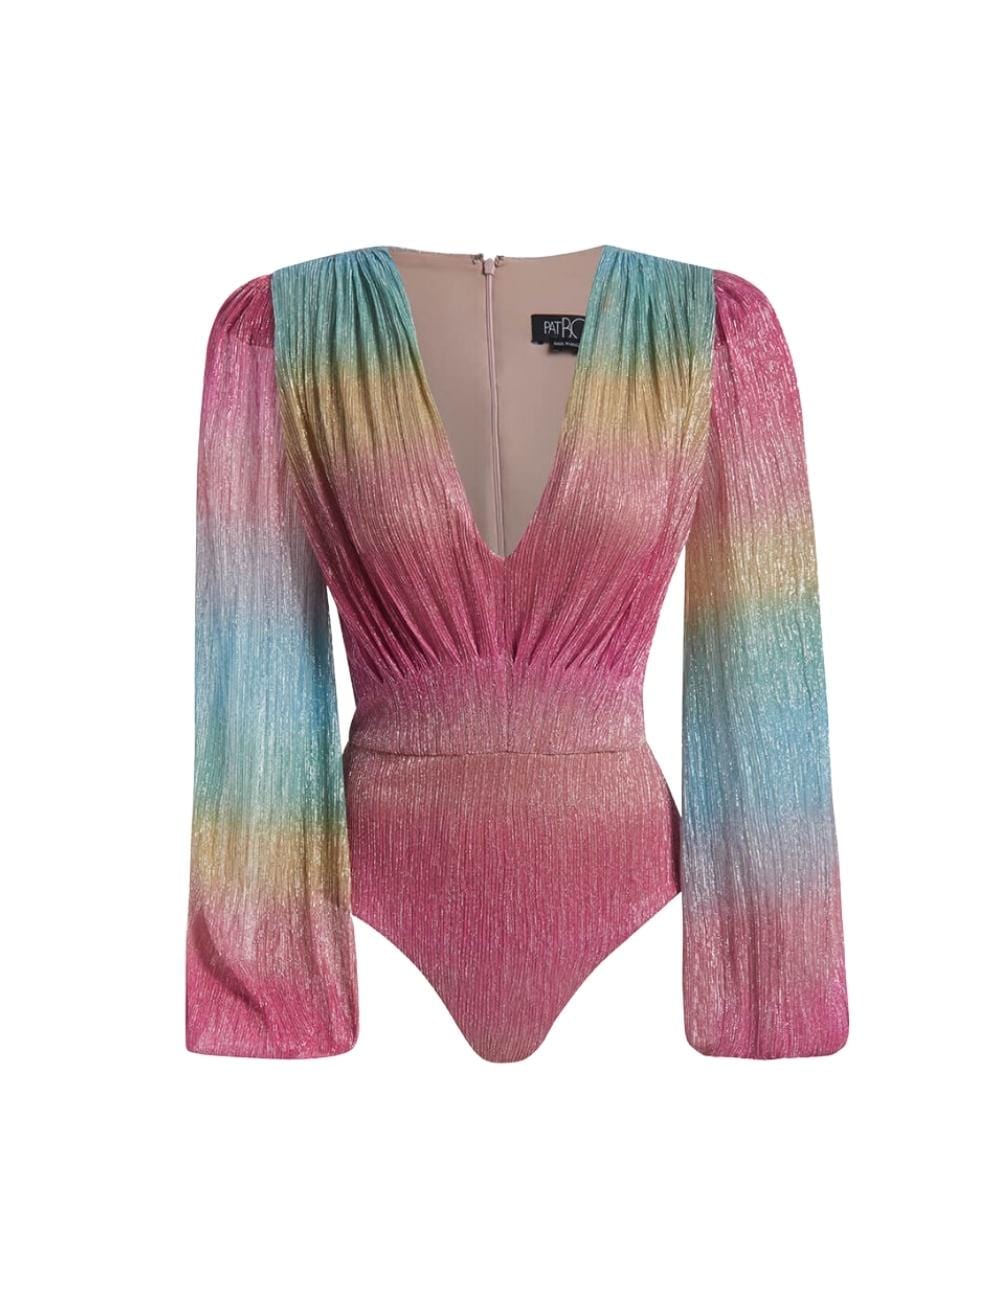 Body Suits - Pink Rainbow & Iridescent